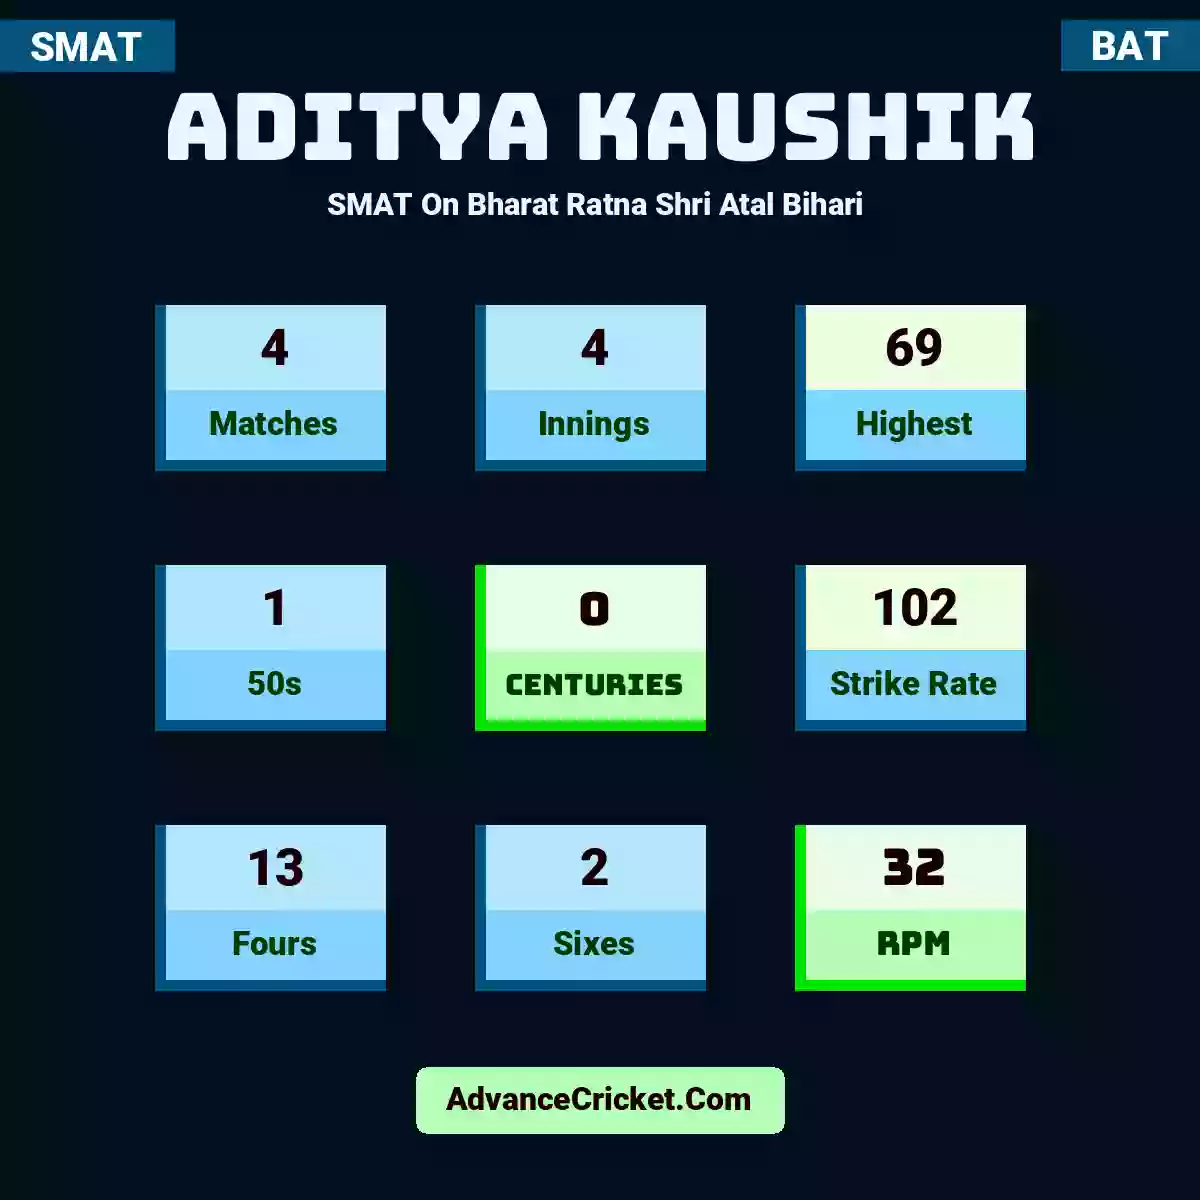 Aditya Kaushik SMAT  On Bharat Ratna Shri Atal Bihari , Aditya Kaushik played 4 matches, scored 69 runs as highest, 1 half-centuries, and 0 centuries, with a strike rate of 102. A.Kaushik hit 13 fours and 2 sixes, with an RPM of 32.